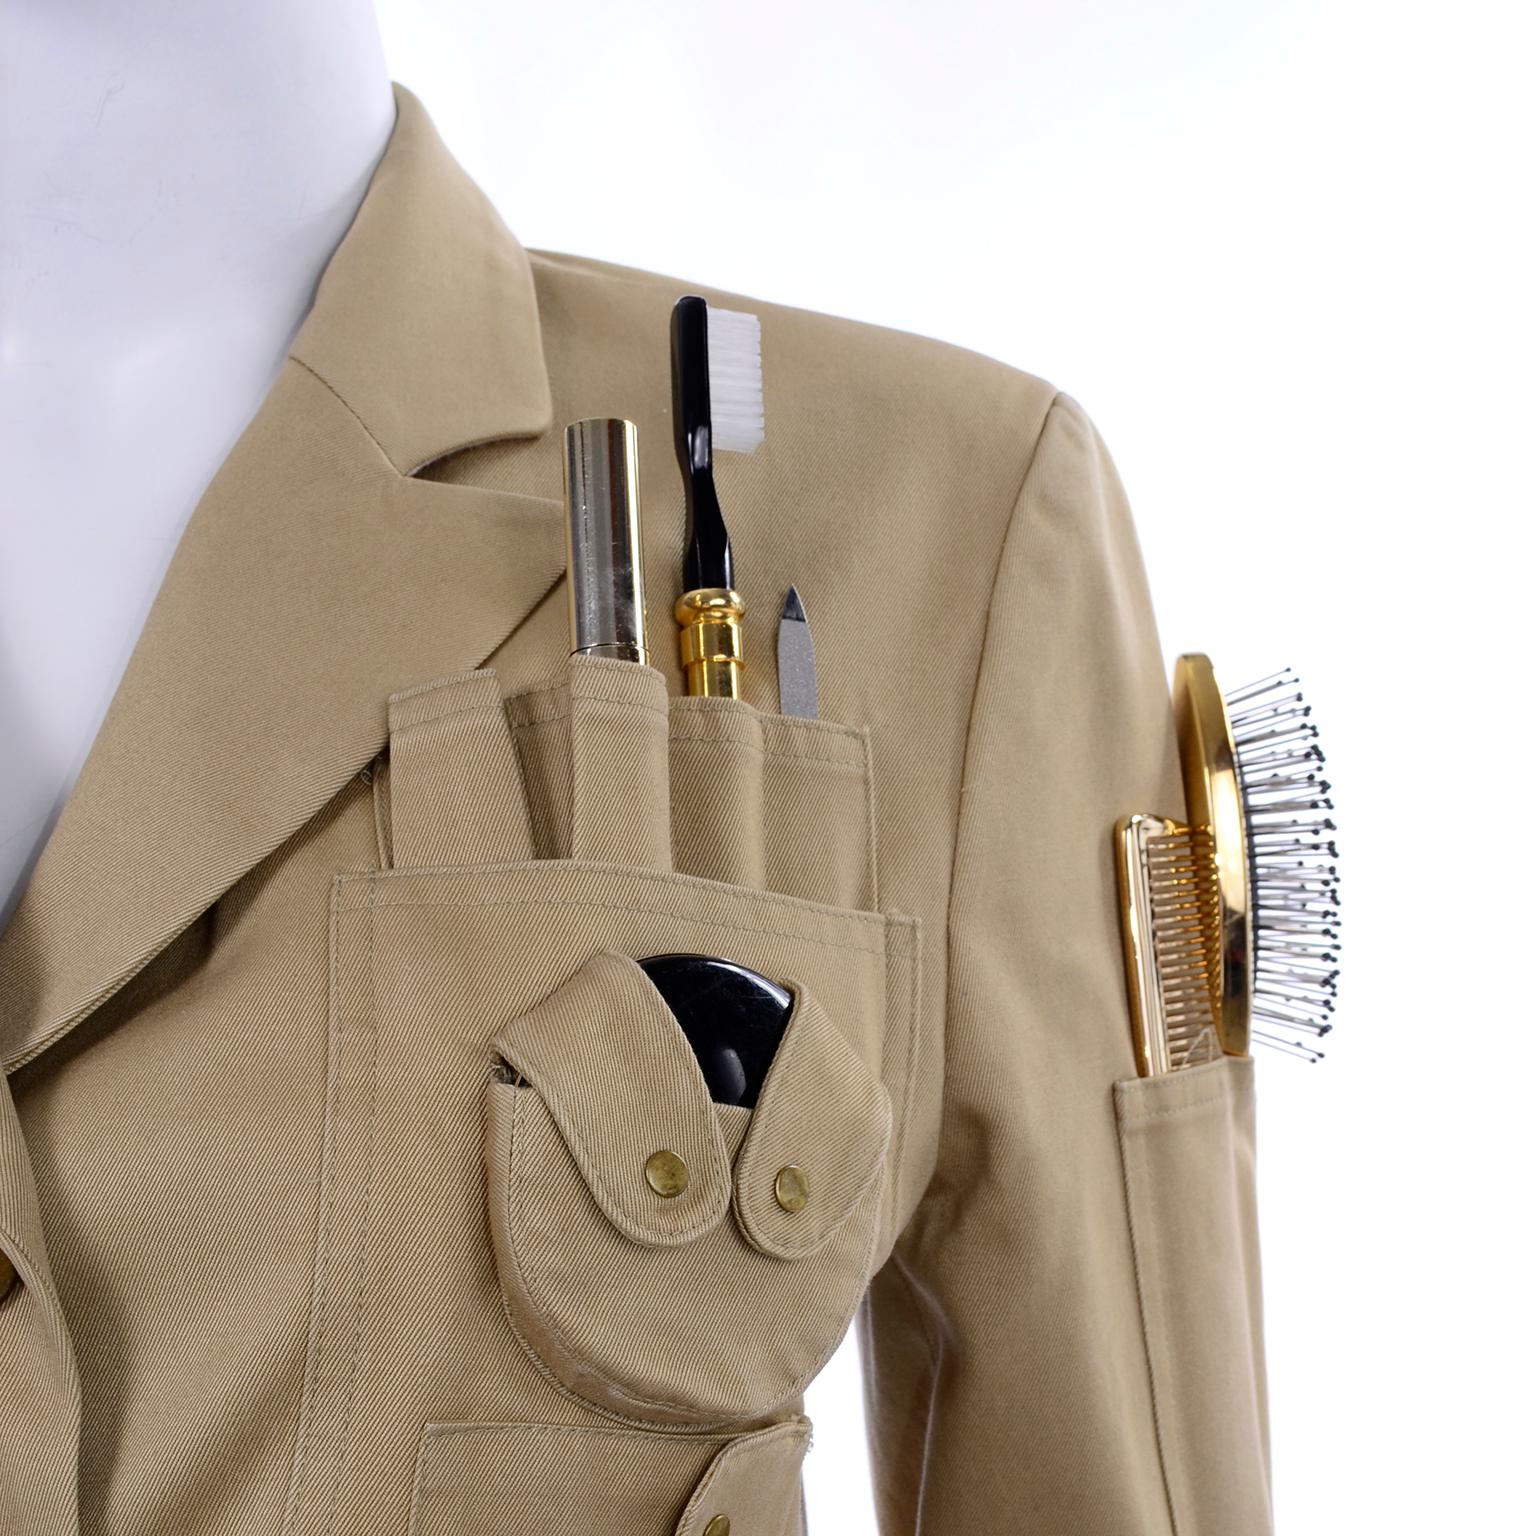 1991 Franco Moschino Couture Survival Jacket in Khaki Cotton Urban Jungle Tools 1